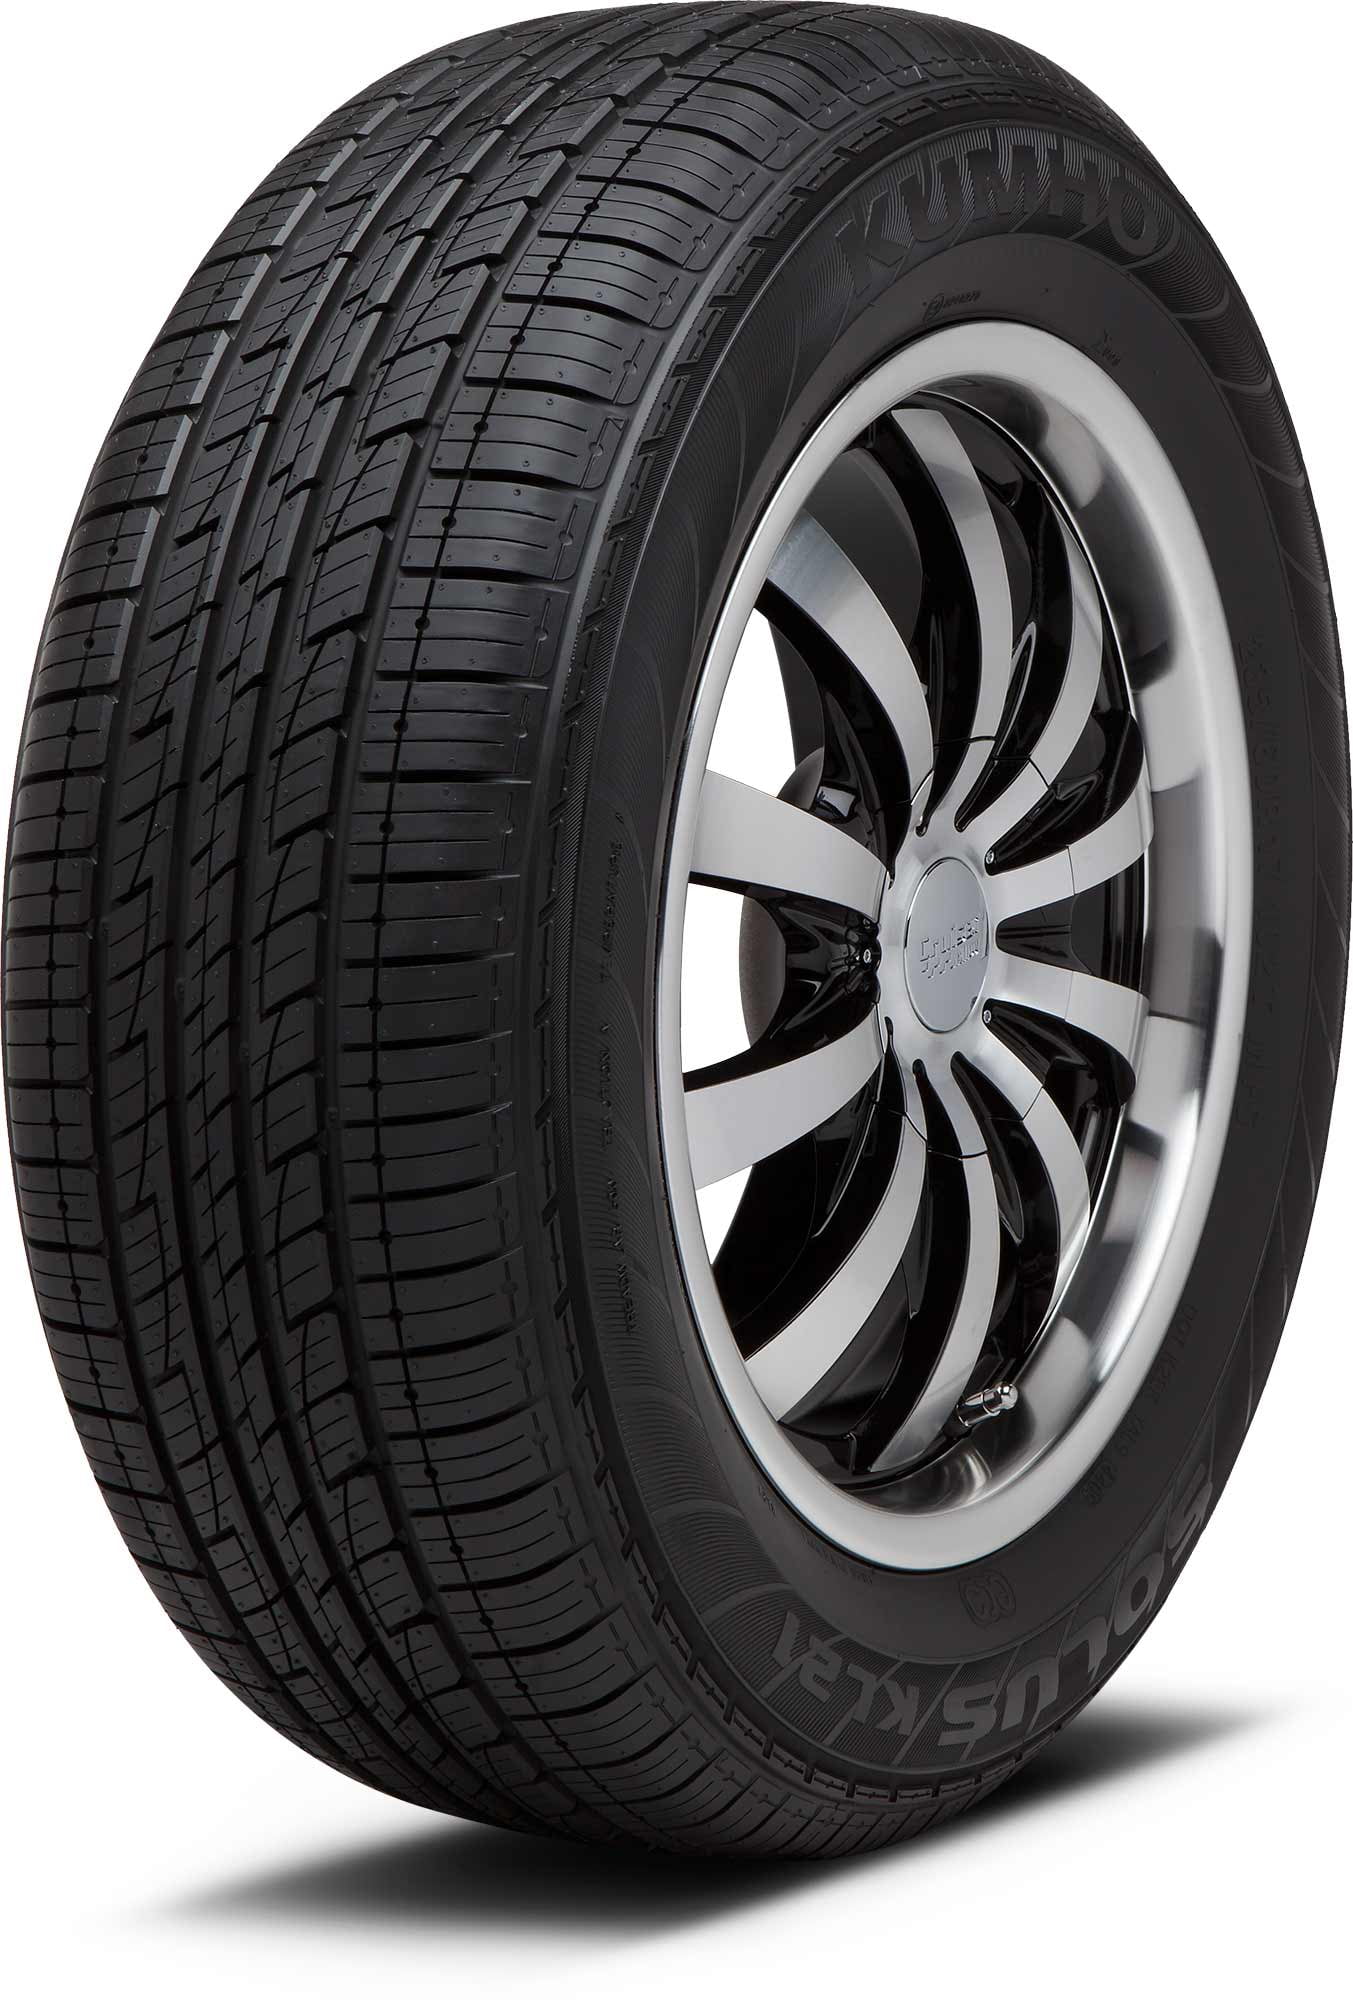 Kumho Eco Solus KL21 All Season 225/65R17 102H SUV/Crossover Tire